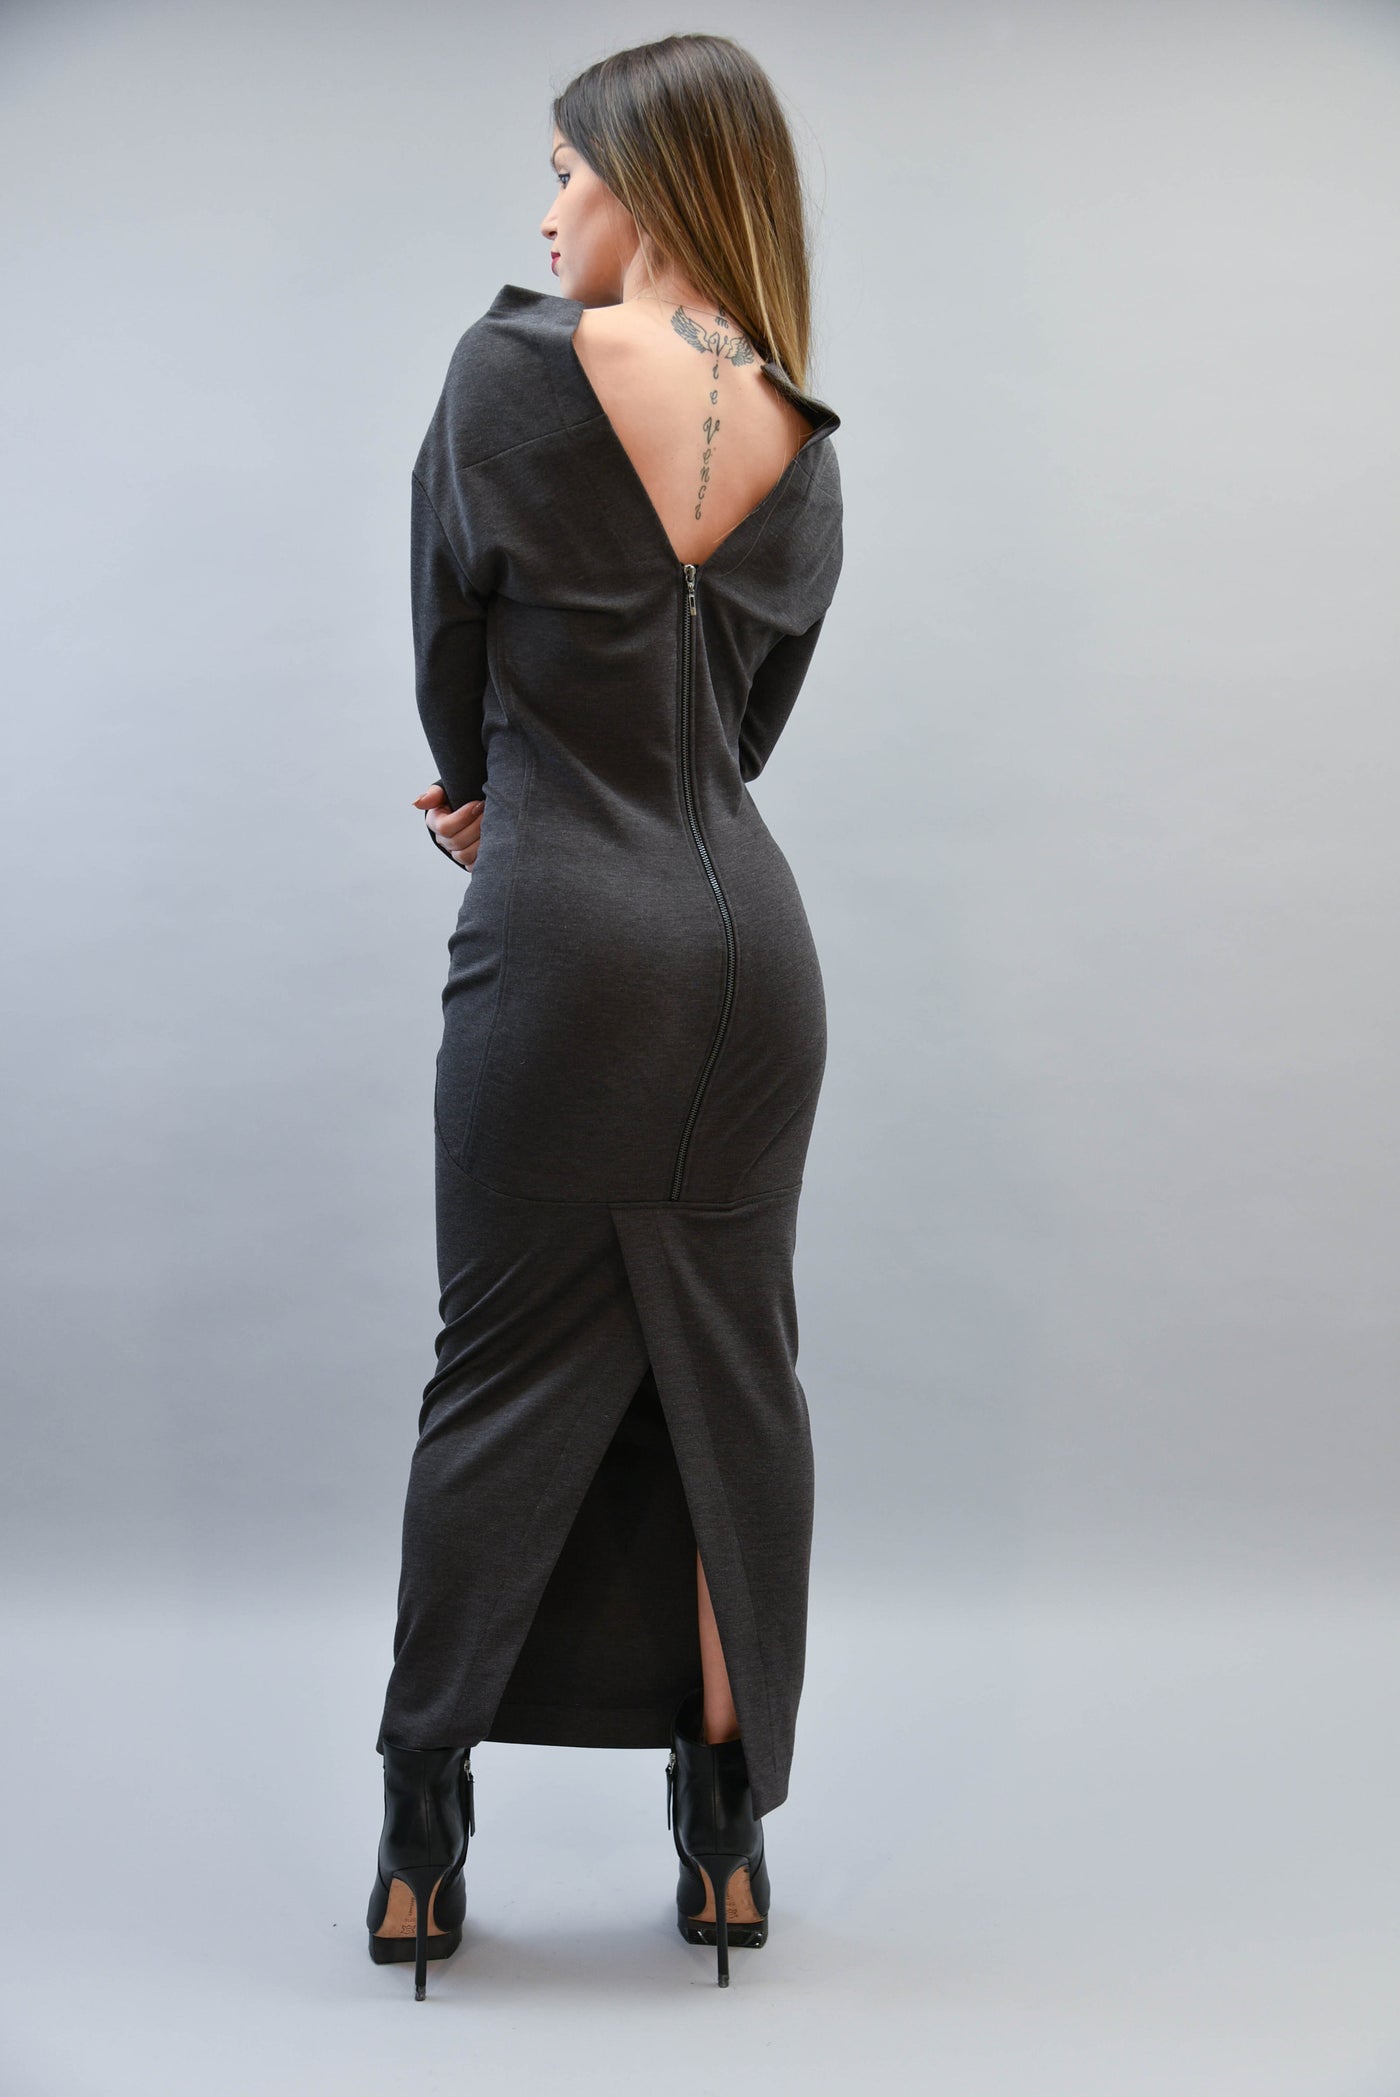 Asymmetrical maxi grey dress with open back F2175